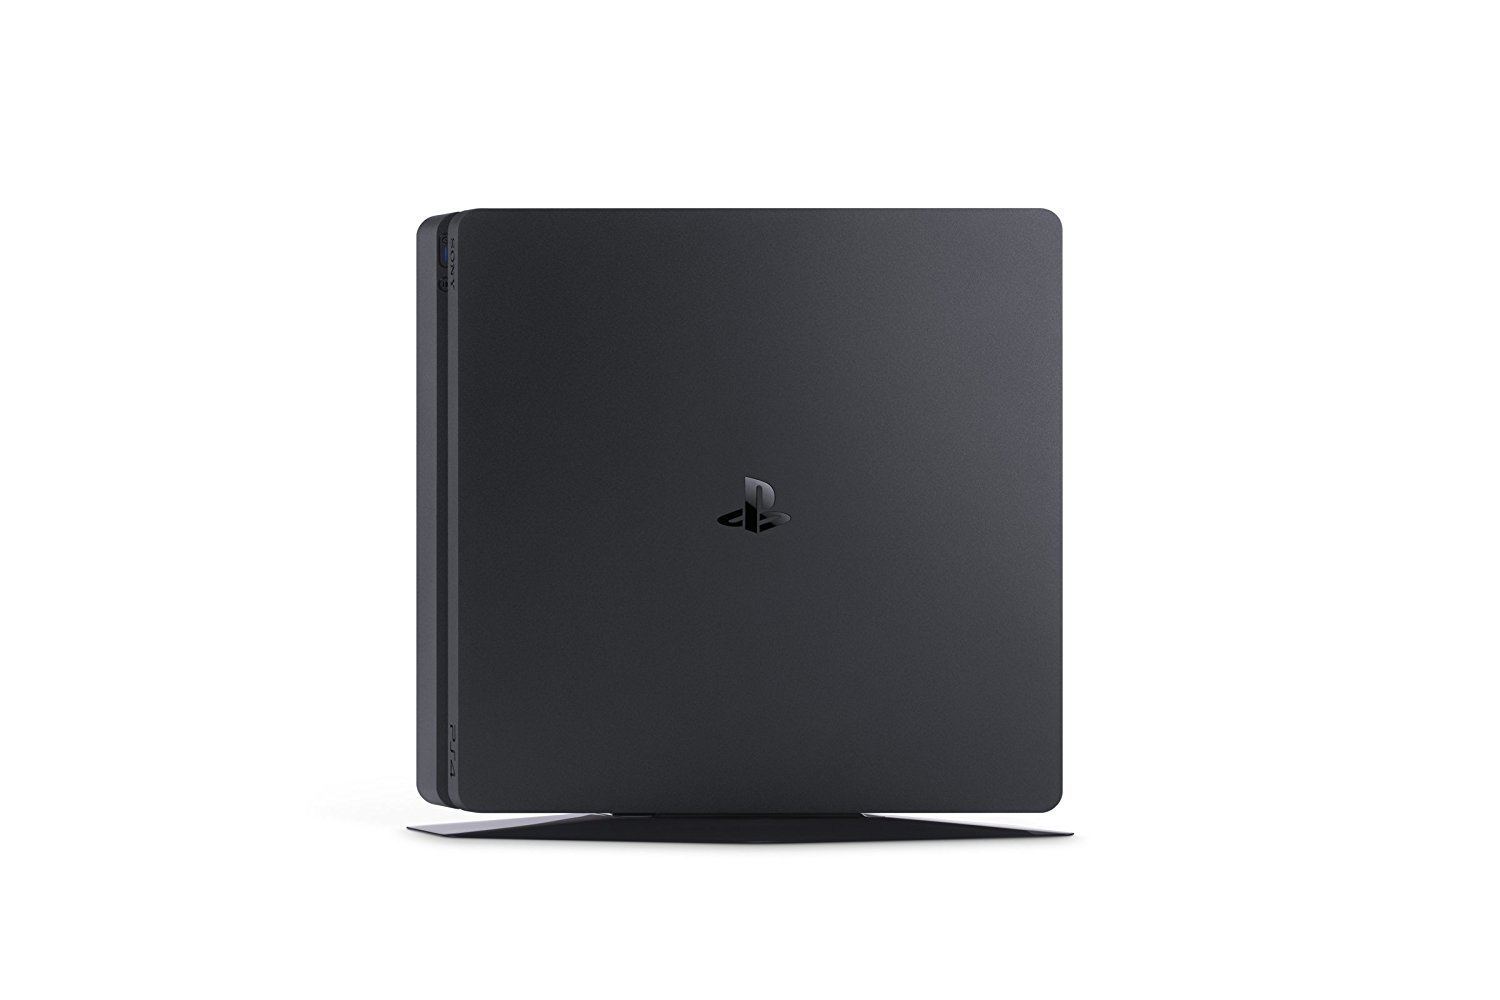 PlayStation 4 CUH-2200 Series 1TB HDD (Jet Black) - Bitcoin 